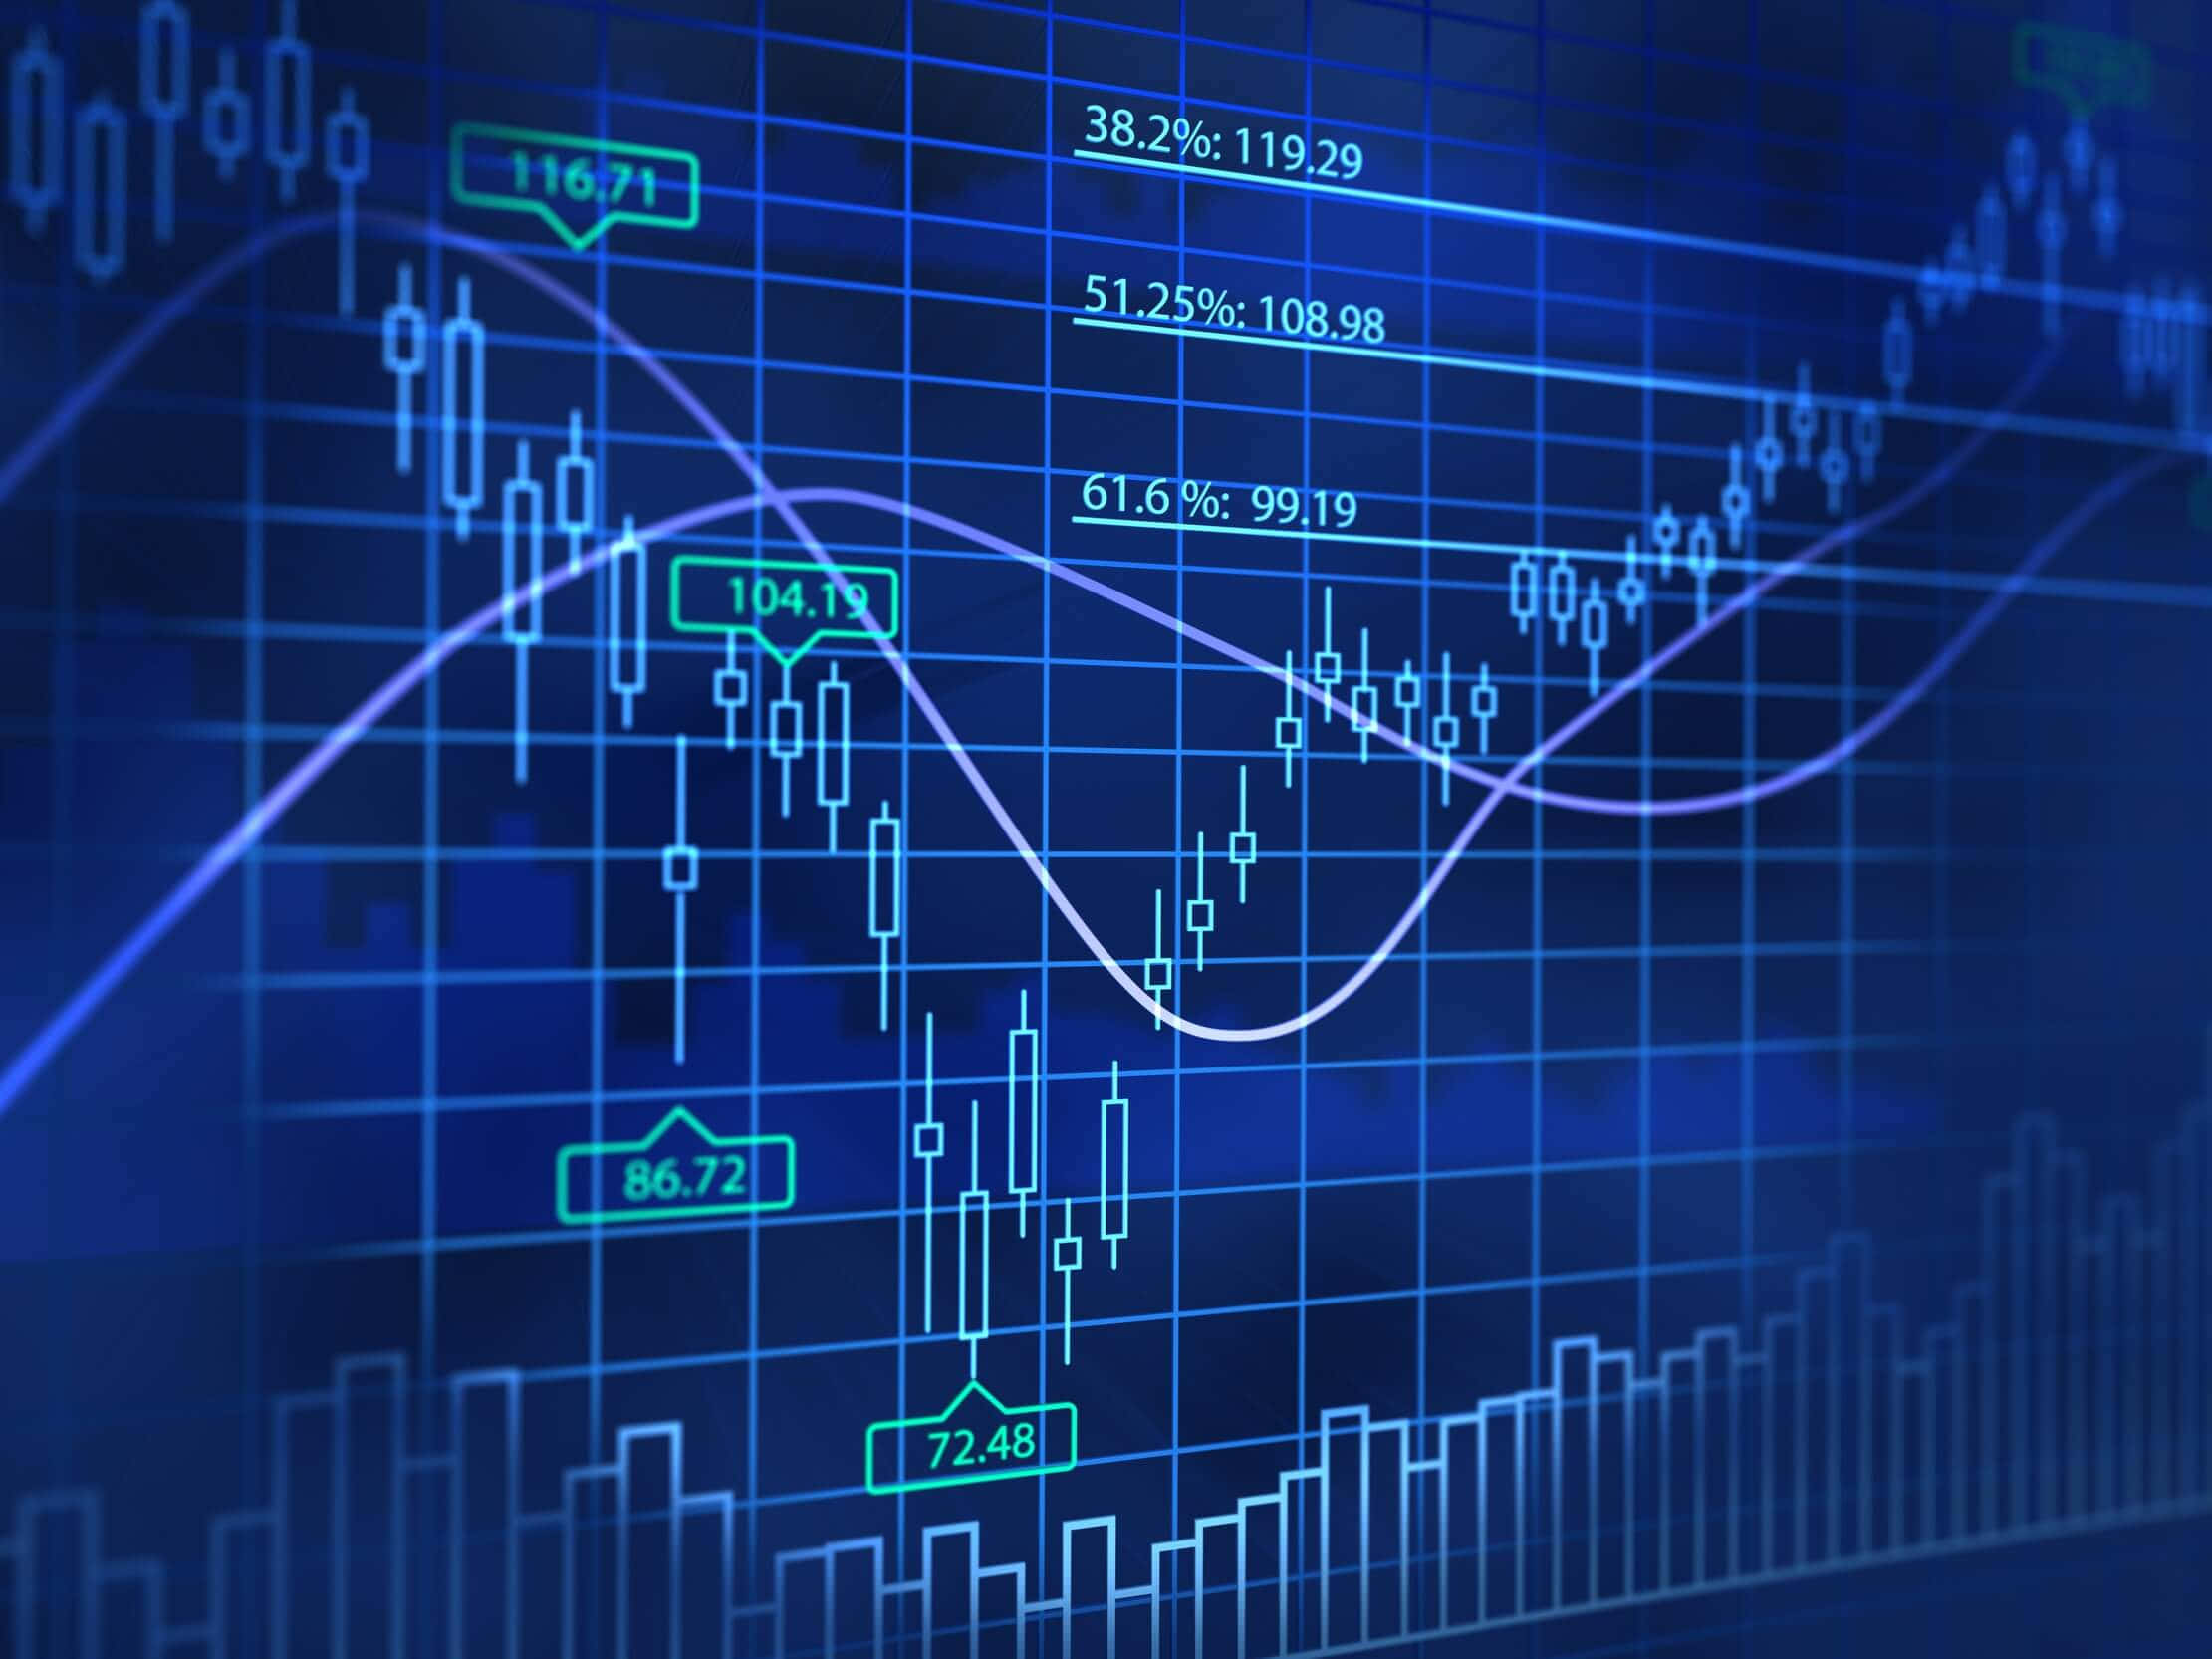 Investors analyzing stock market trends on screens